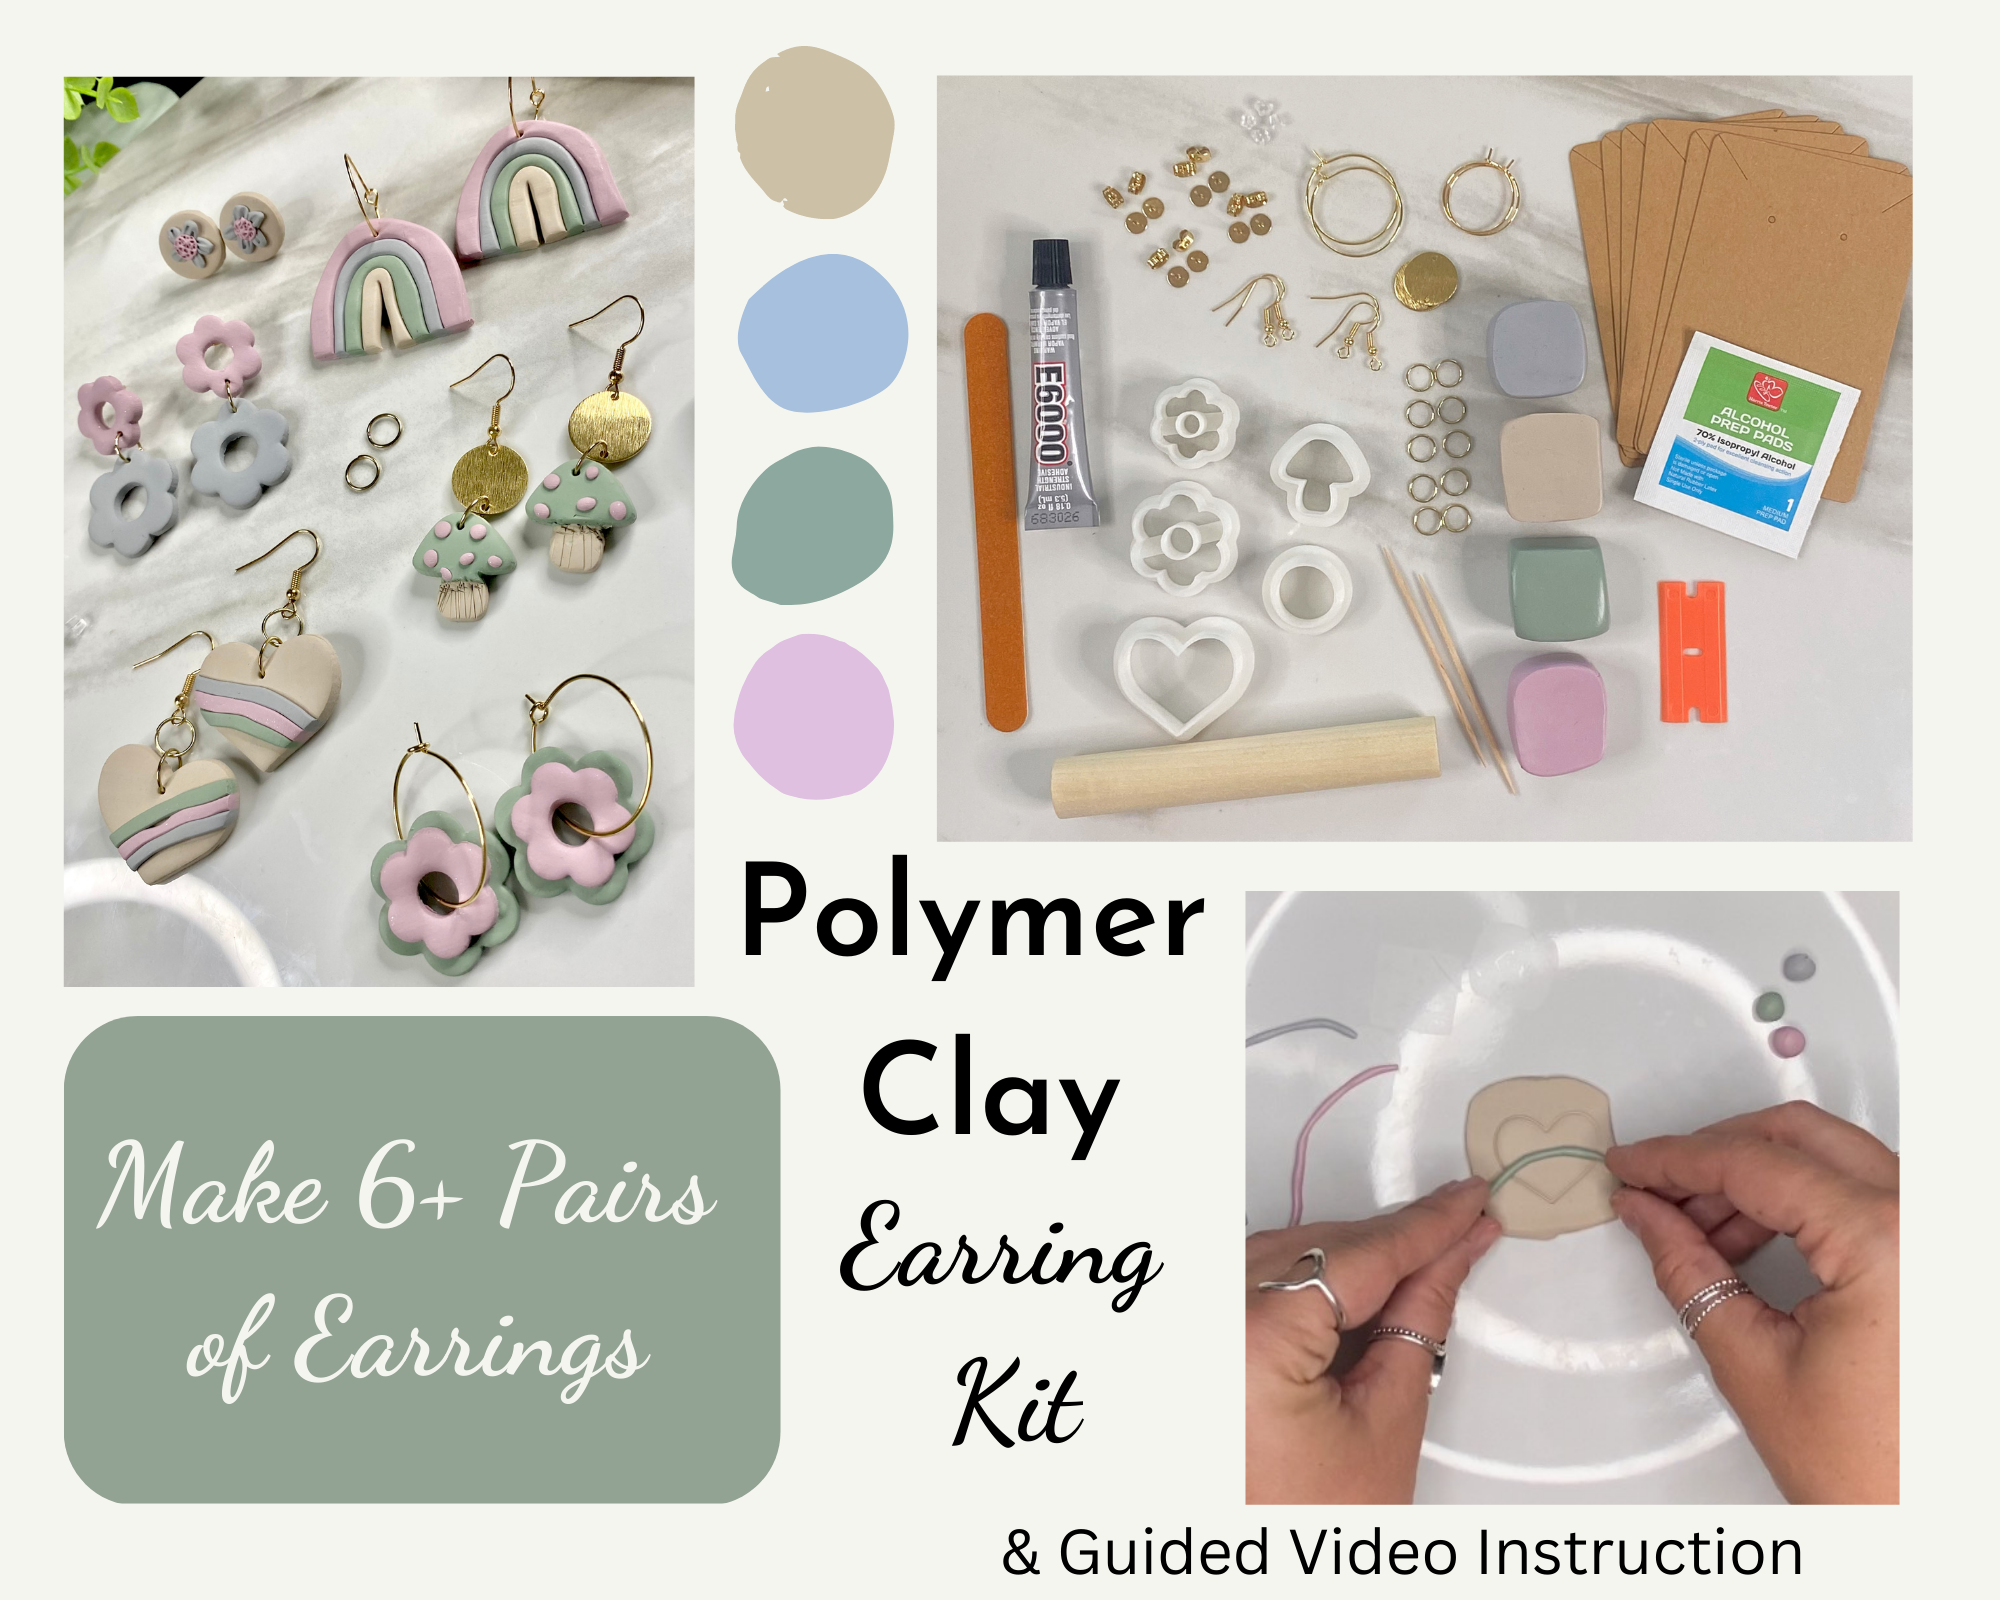 Premium DIY Polymer Clay Earring Making Kit (Makes up to 40 Pairs!)  Walk-Through // Great Gift! 